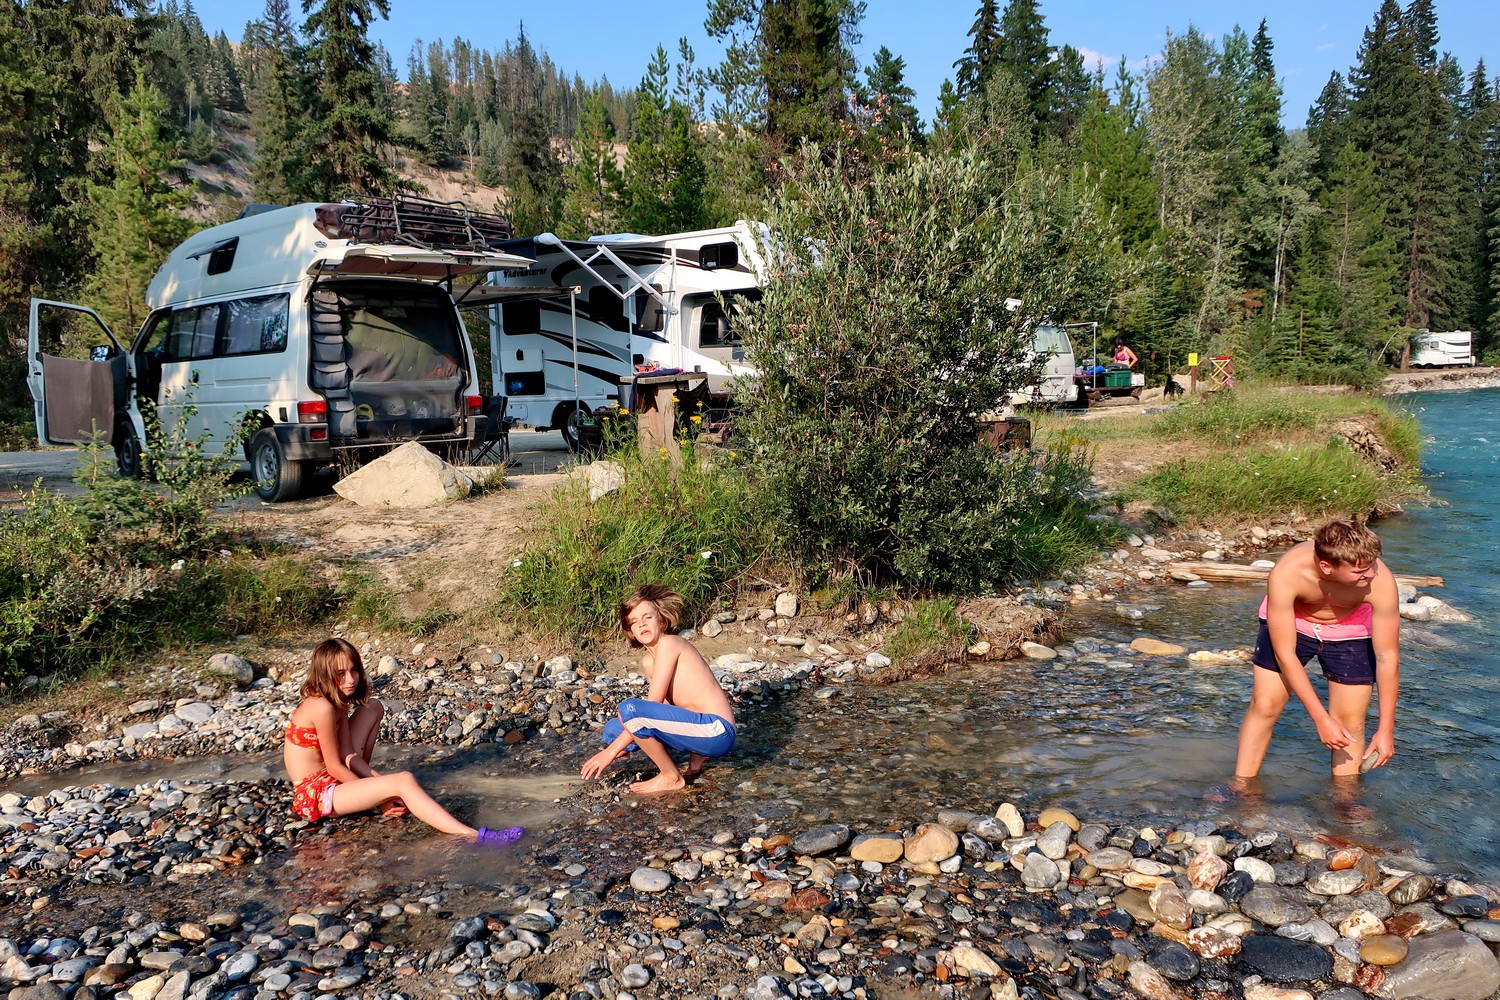 Our campsite on Waitabit Creek with Rosemarie, Jay and Kuba